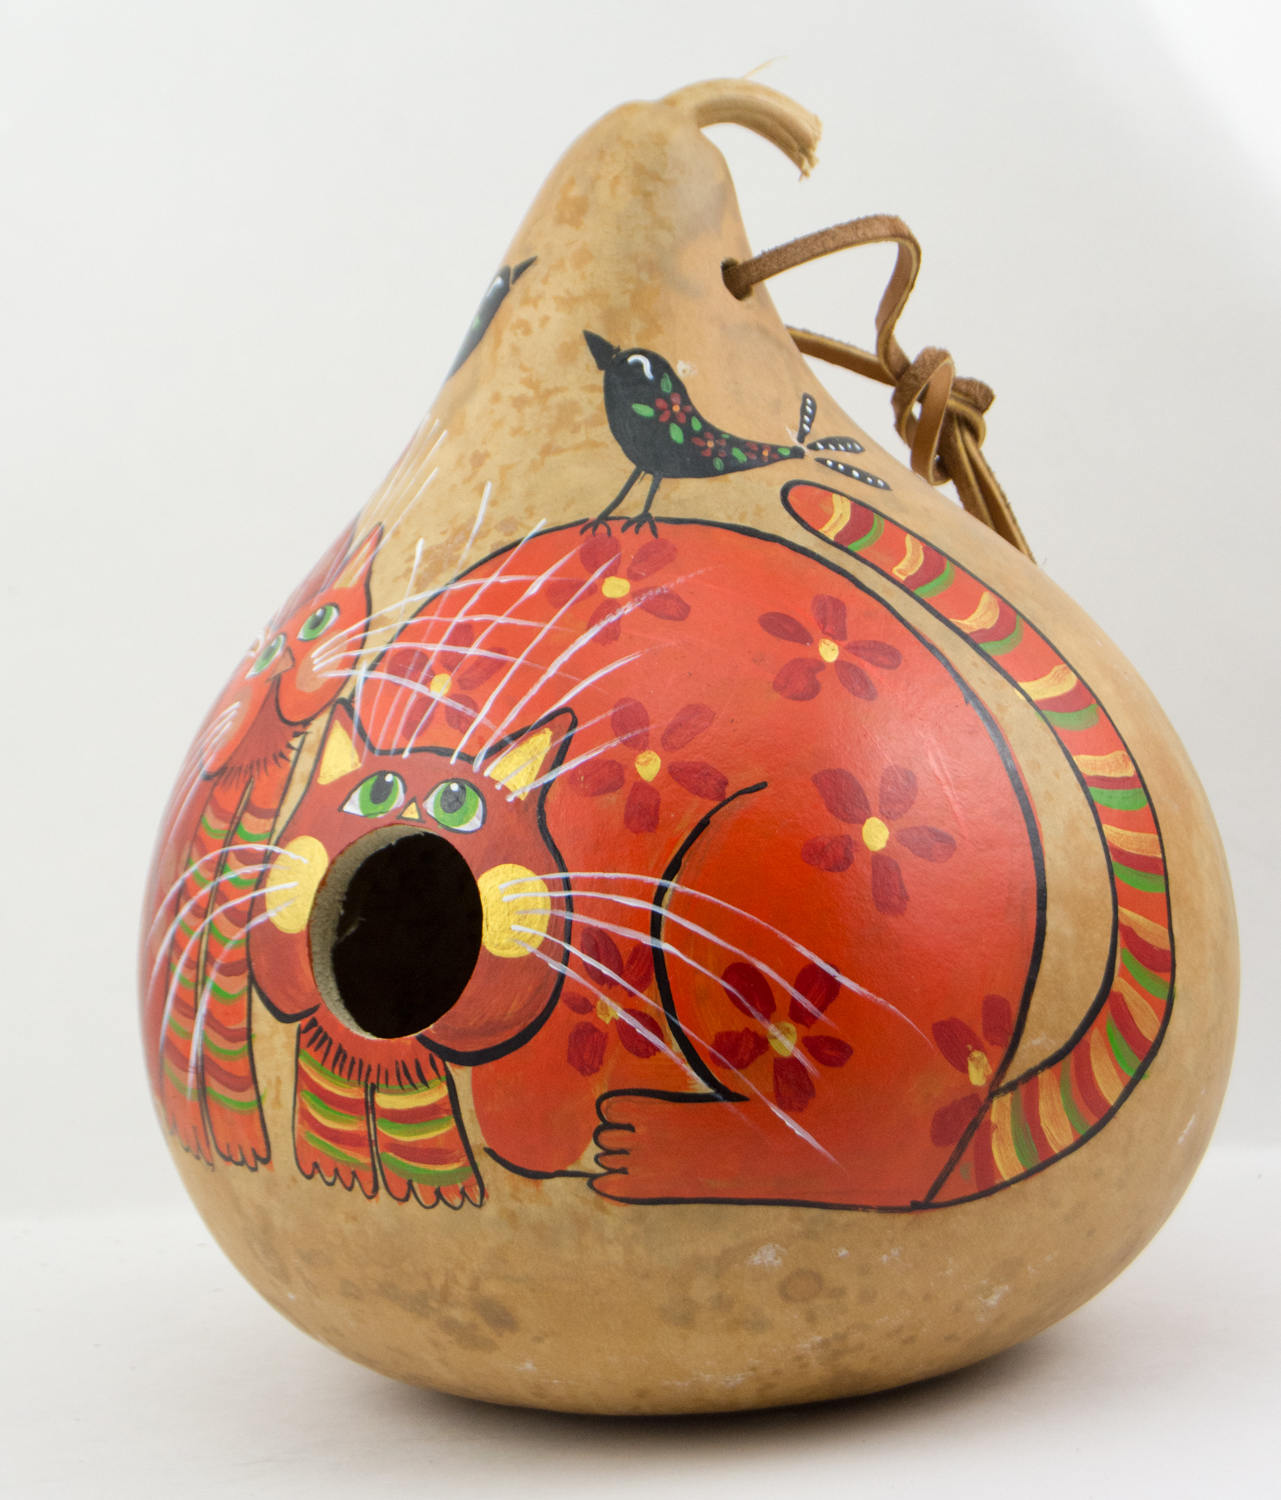 Birdhouse Gourd - Kitty Cat - Whimsical Garden Art - Cat lover Gift - Outdoor Decor - Bird Lover - Original Artwork - Gourdaments